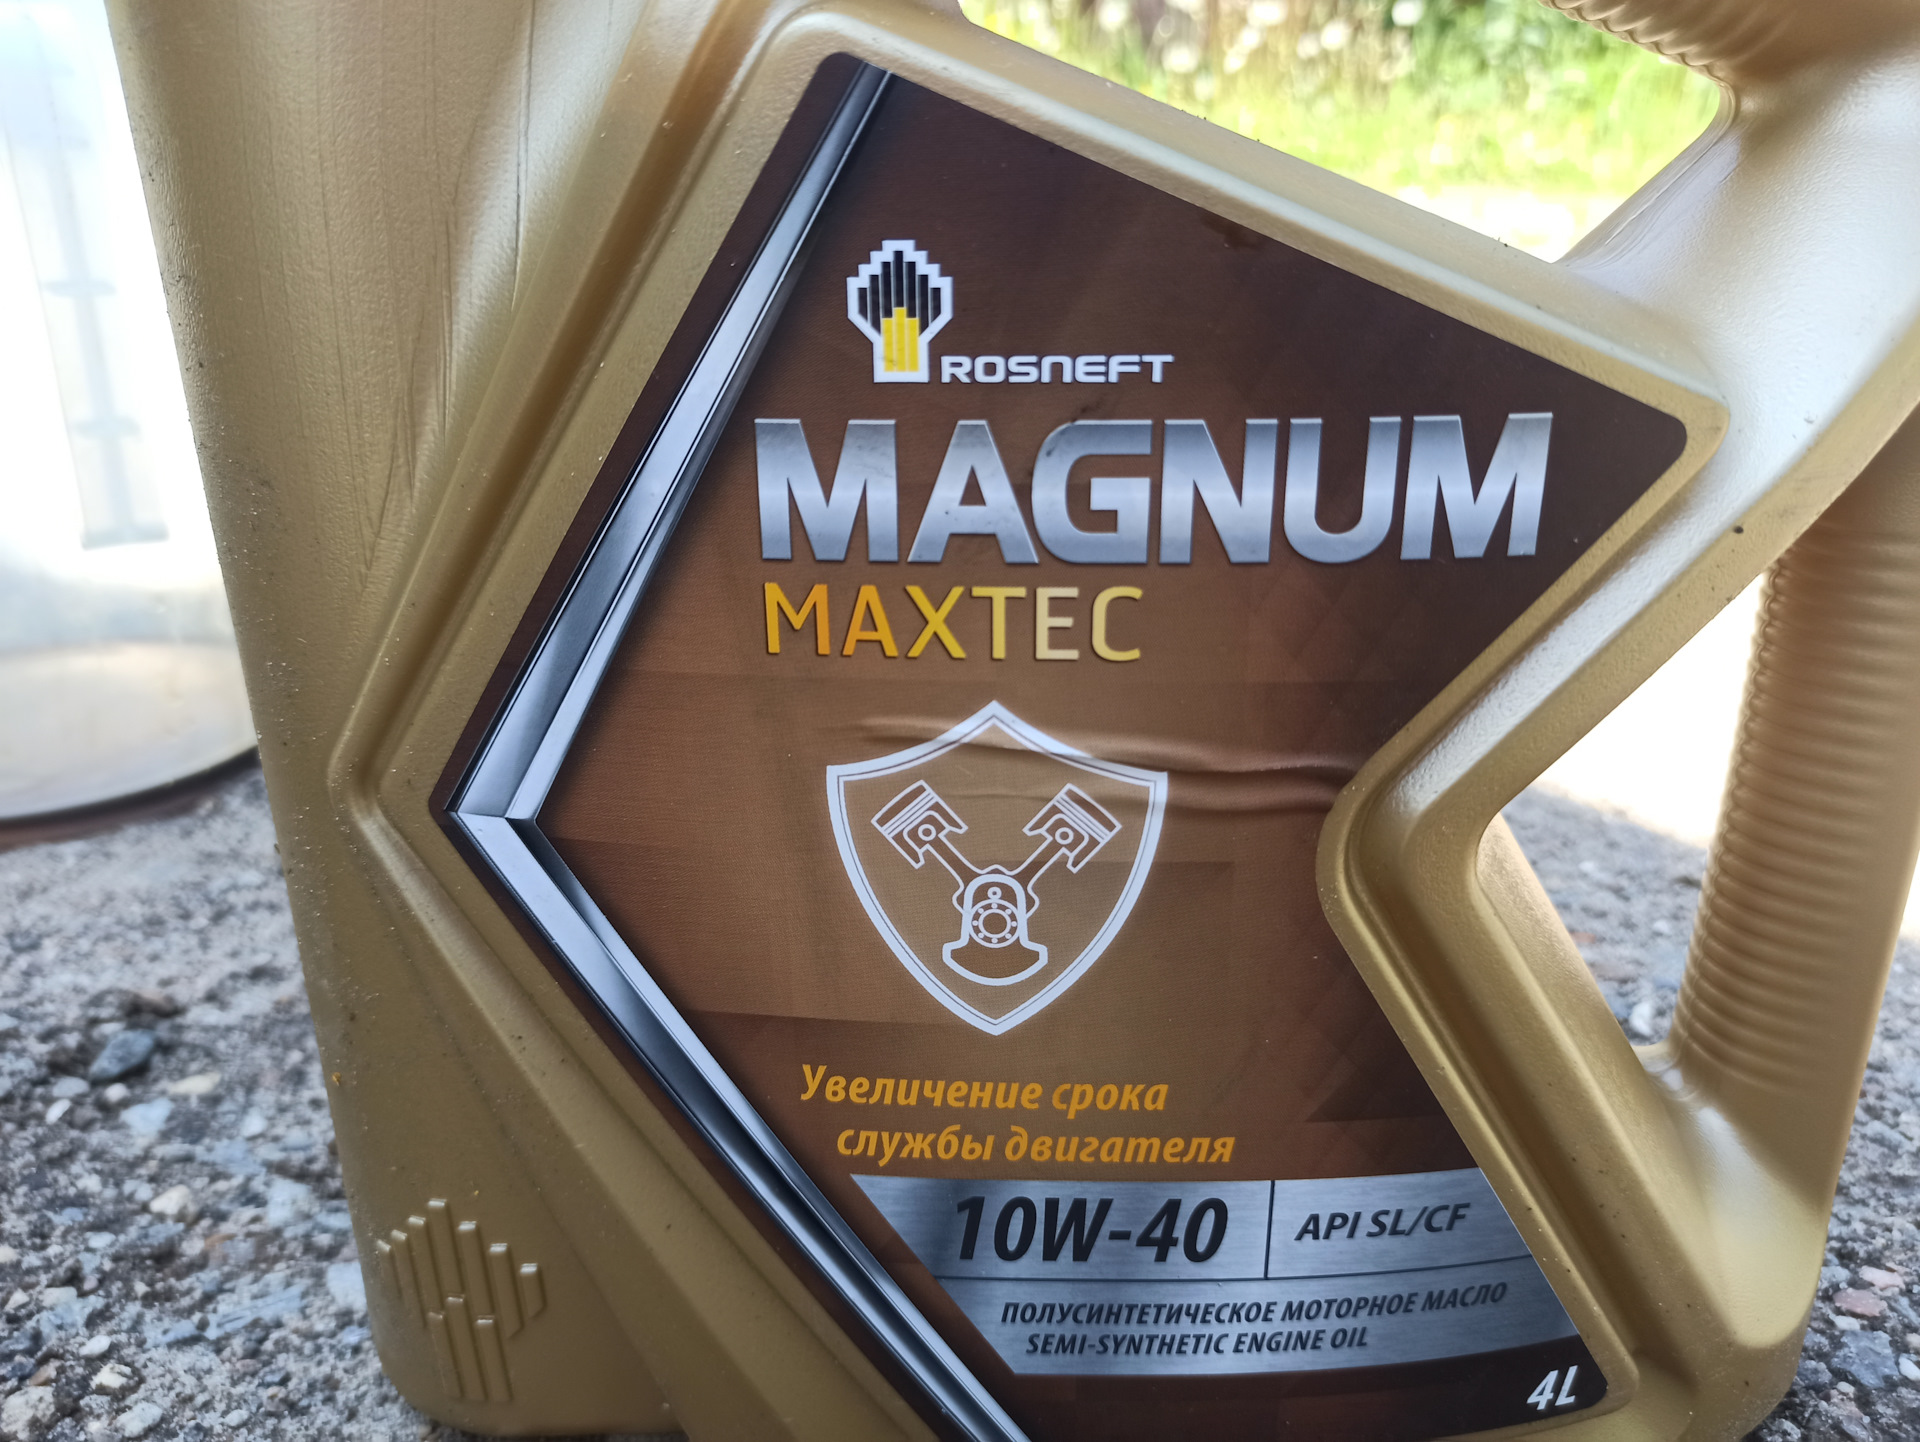 Rosneft Magnum Maxtec 10w-40. Реклама масло Роснефть Магнум. Масло моторное Wirtgen Group 10w40. Рено Магнум ae385ti замена масла. Масло роснефть макстек